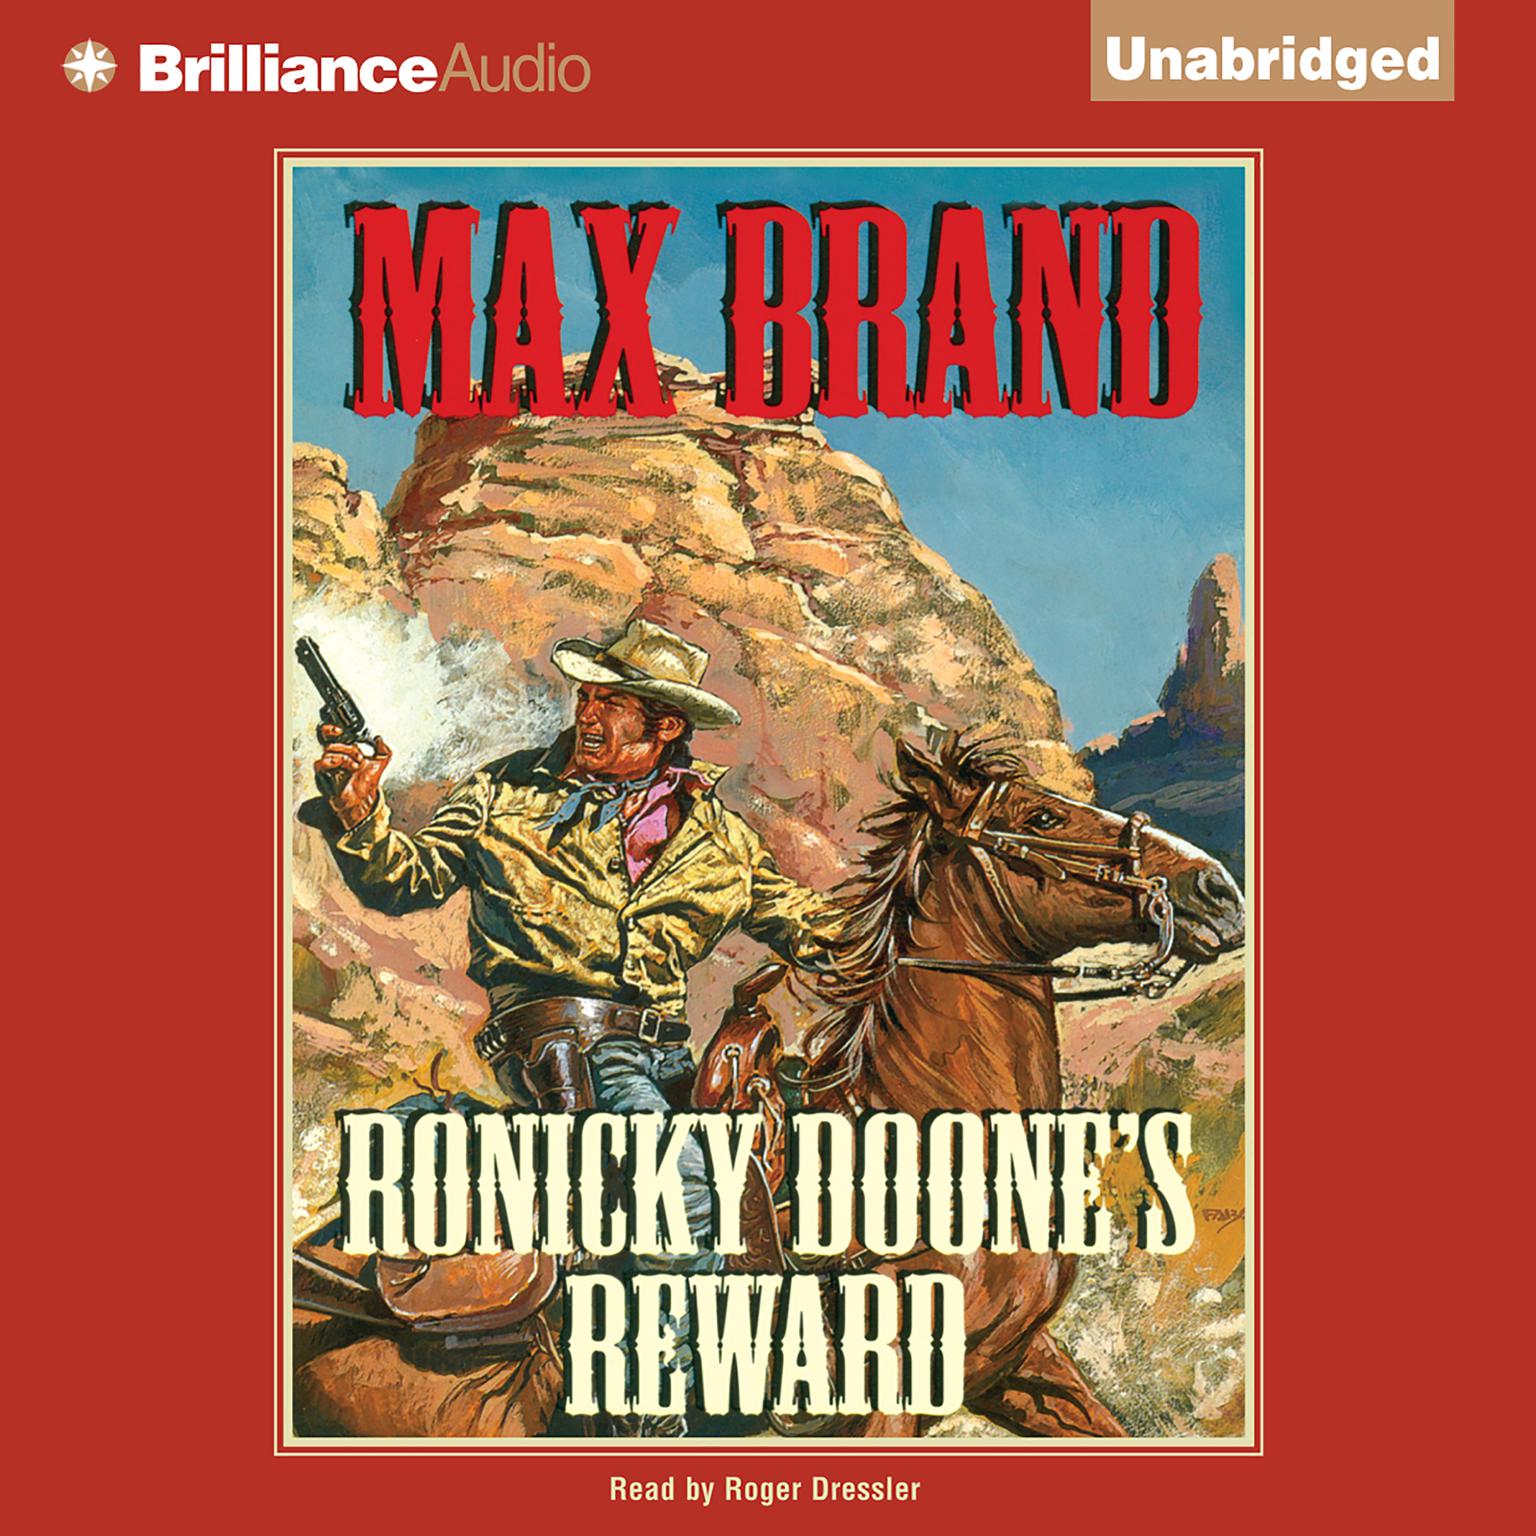 Ronicky Doones Reward Audiobook, by Max Brand